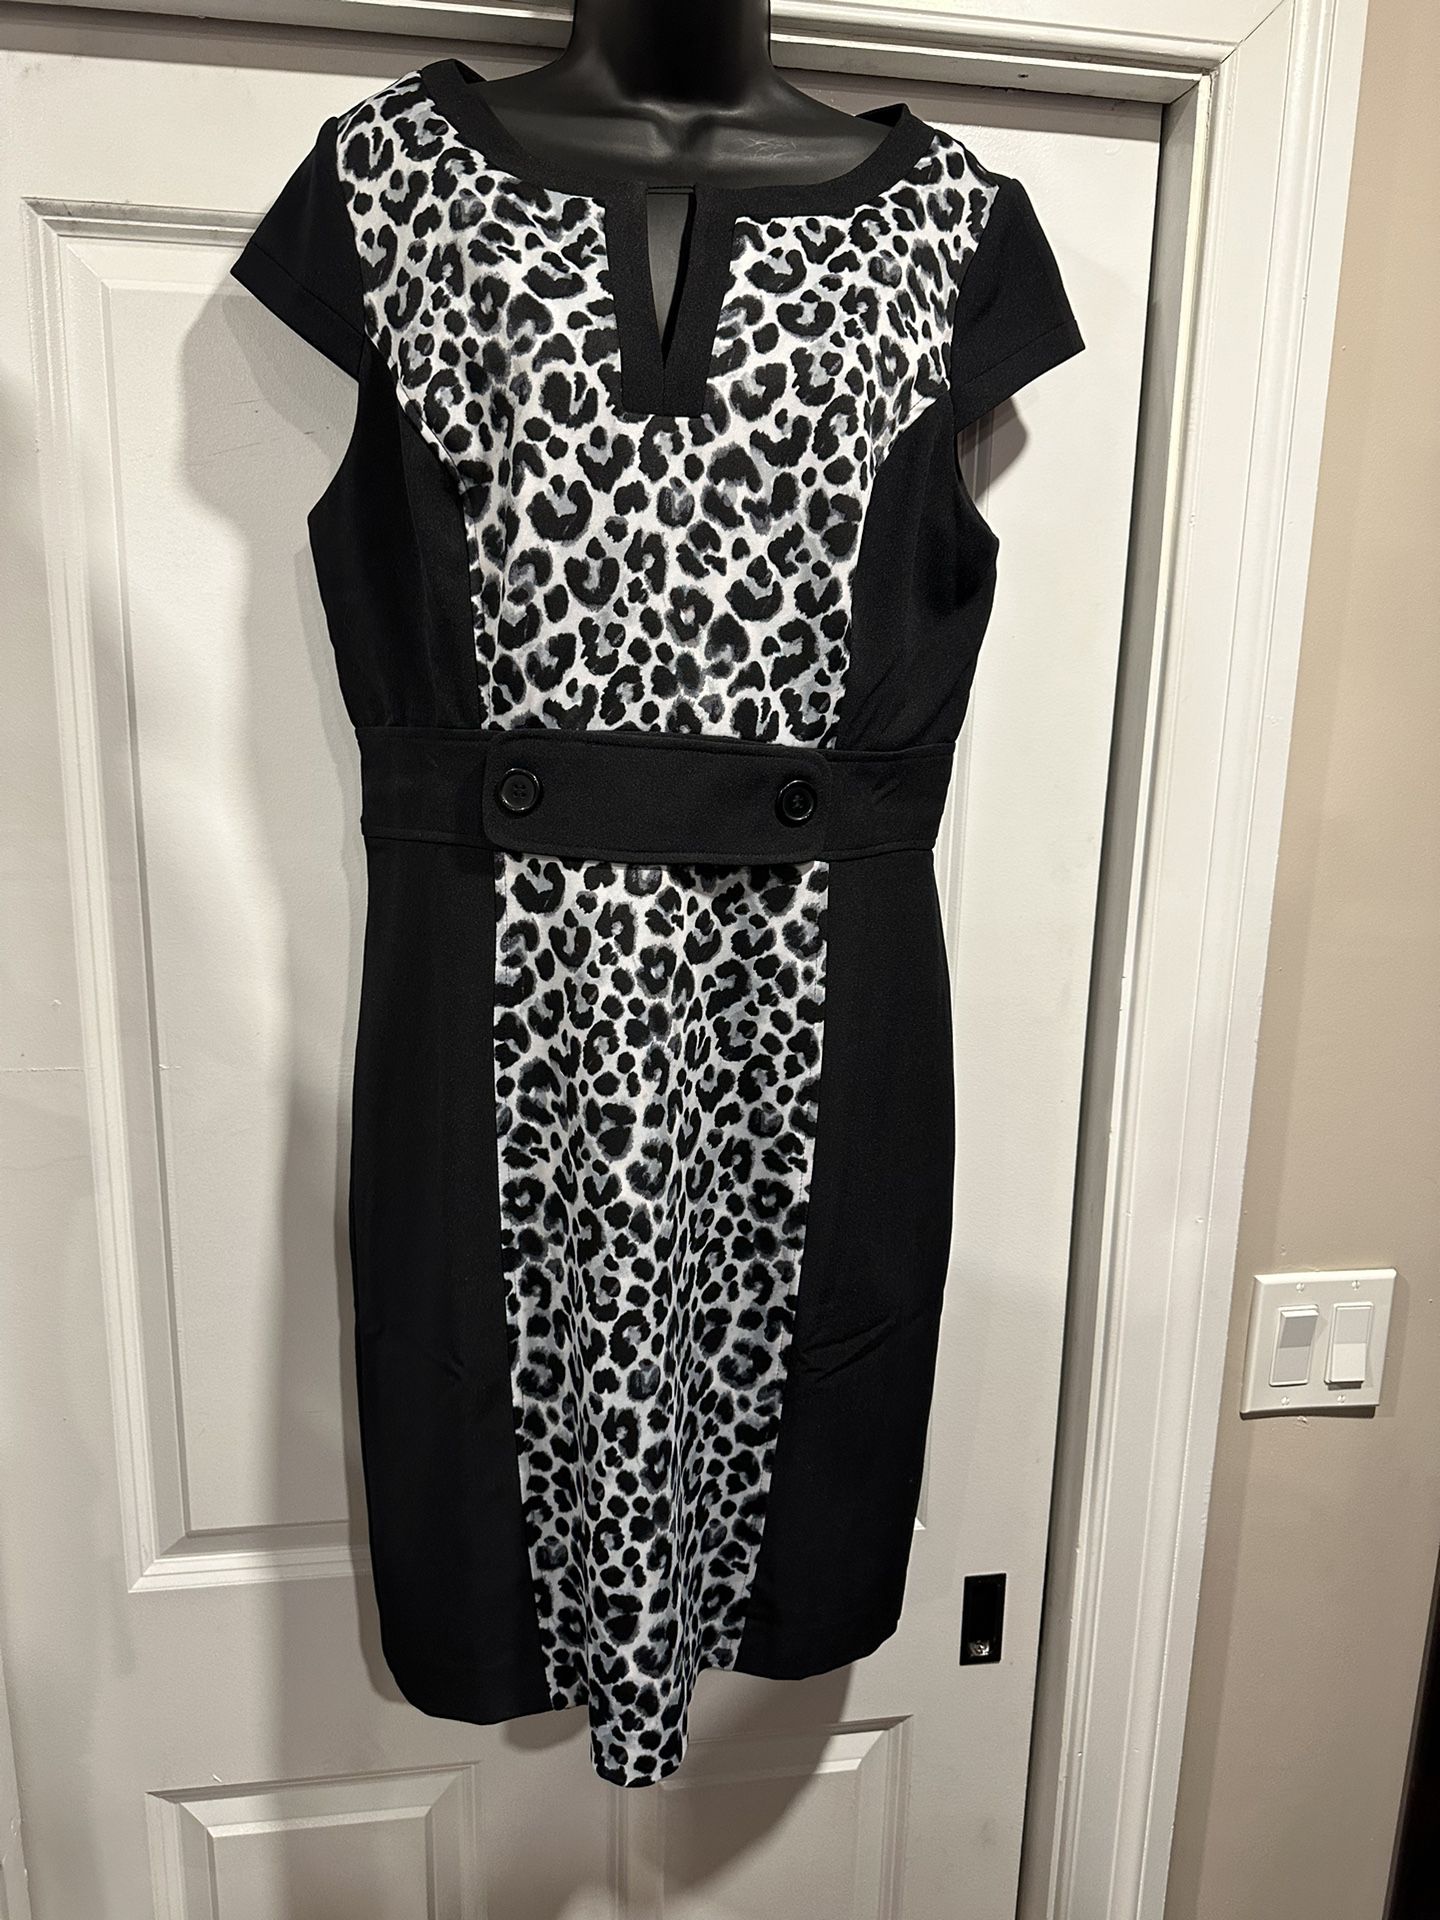 Sophisticated Leopard Print Panel Dress